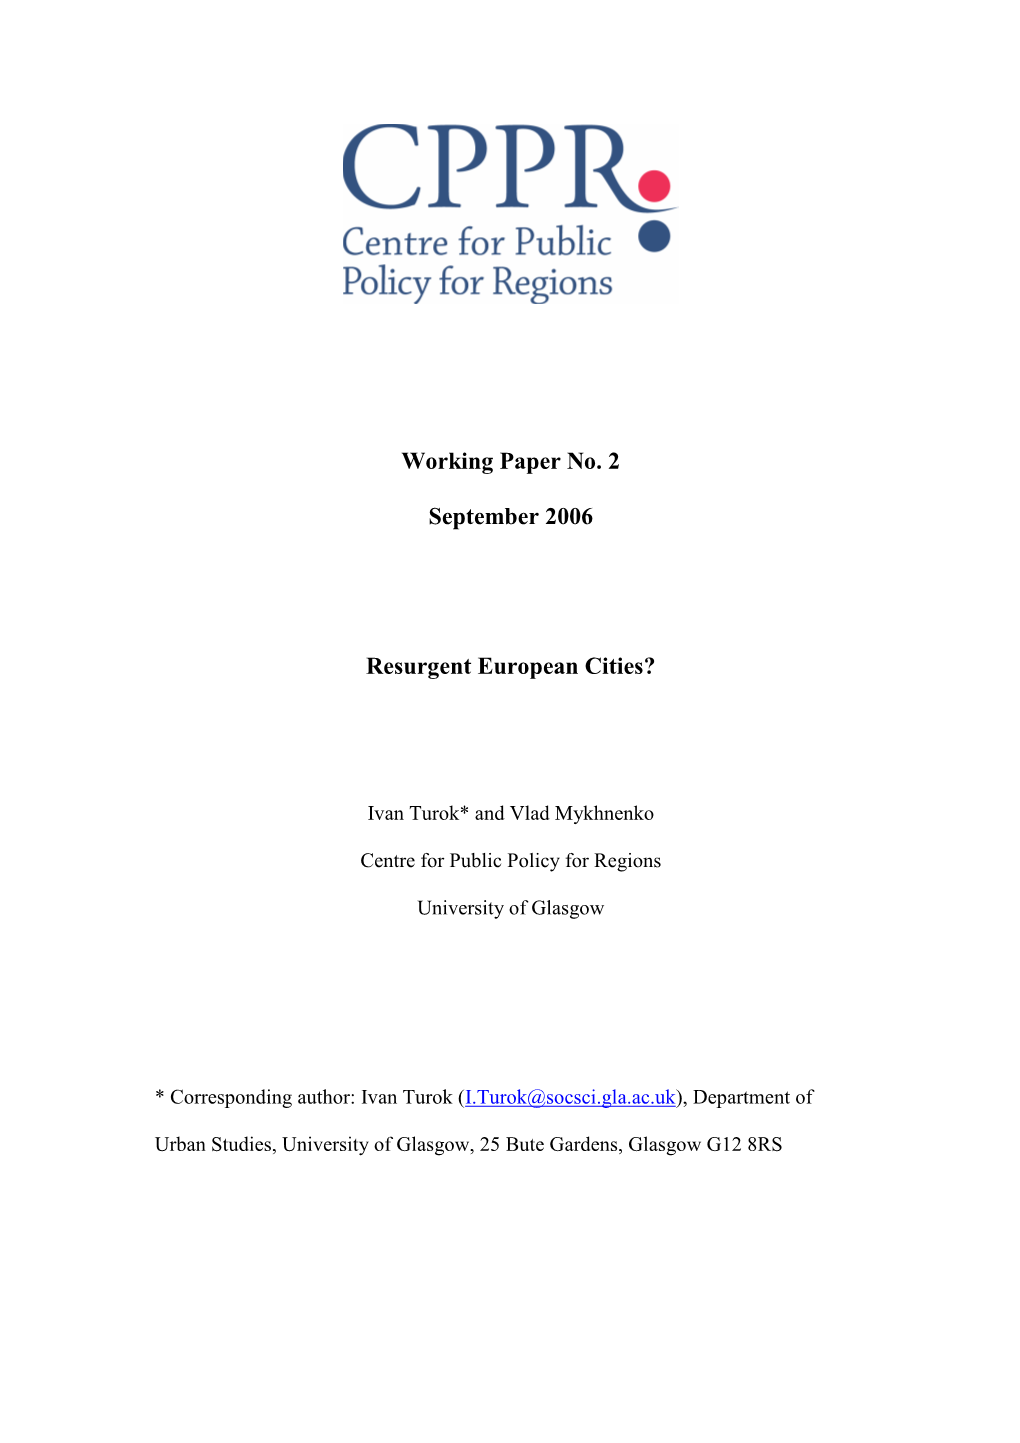 Working Paper No. 2 September 2006 Resurgent European Cities?